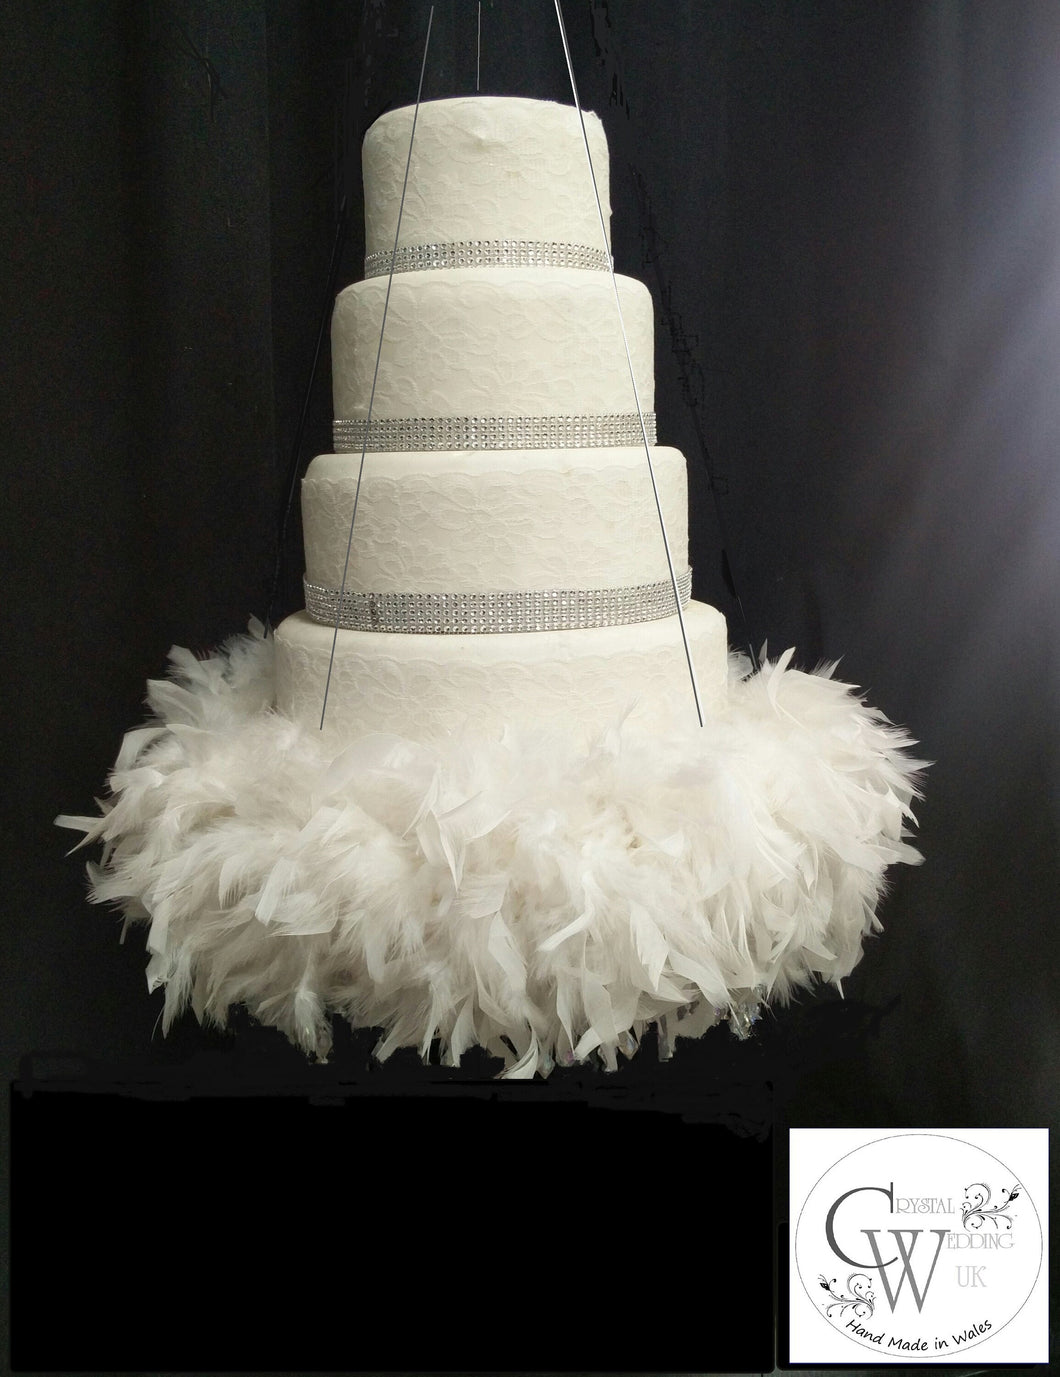 Cake plate, Suspended Swing cake platform , Feather cake hanging platform by Crystal wedding uk